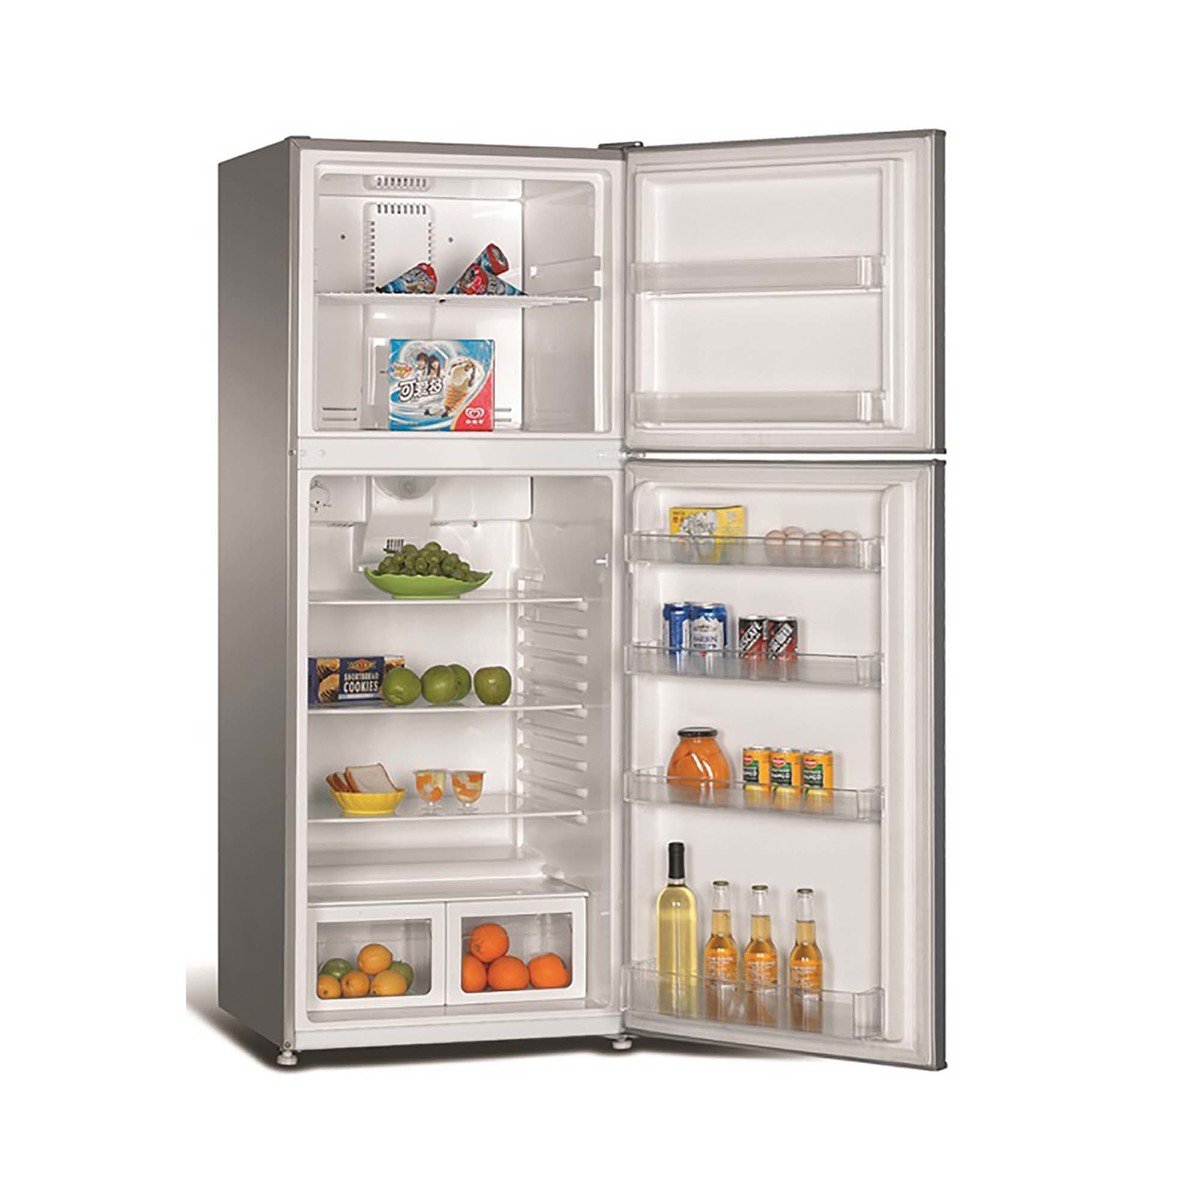 Chiq Double Door Refrigerator CR410 410Ltr